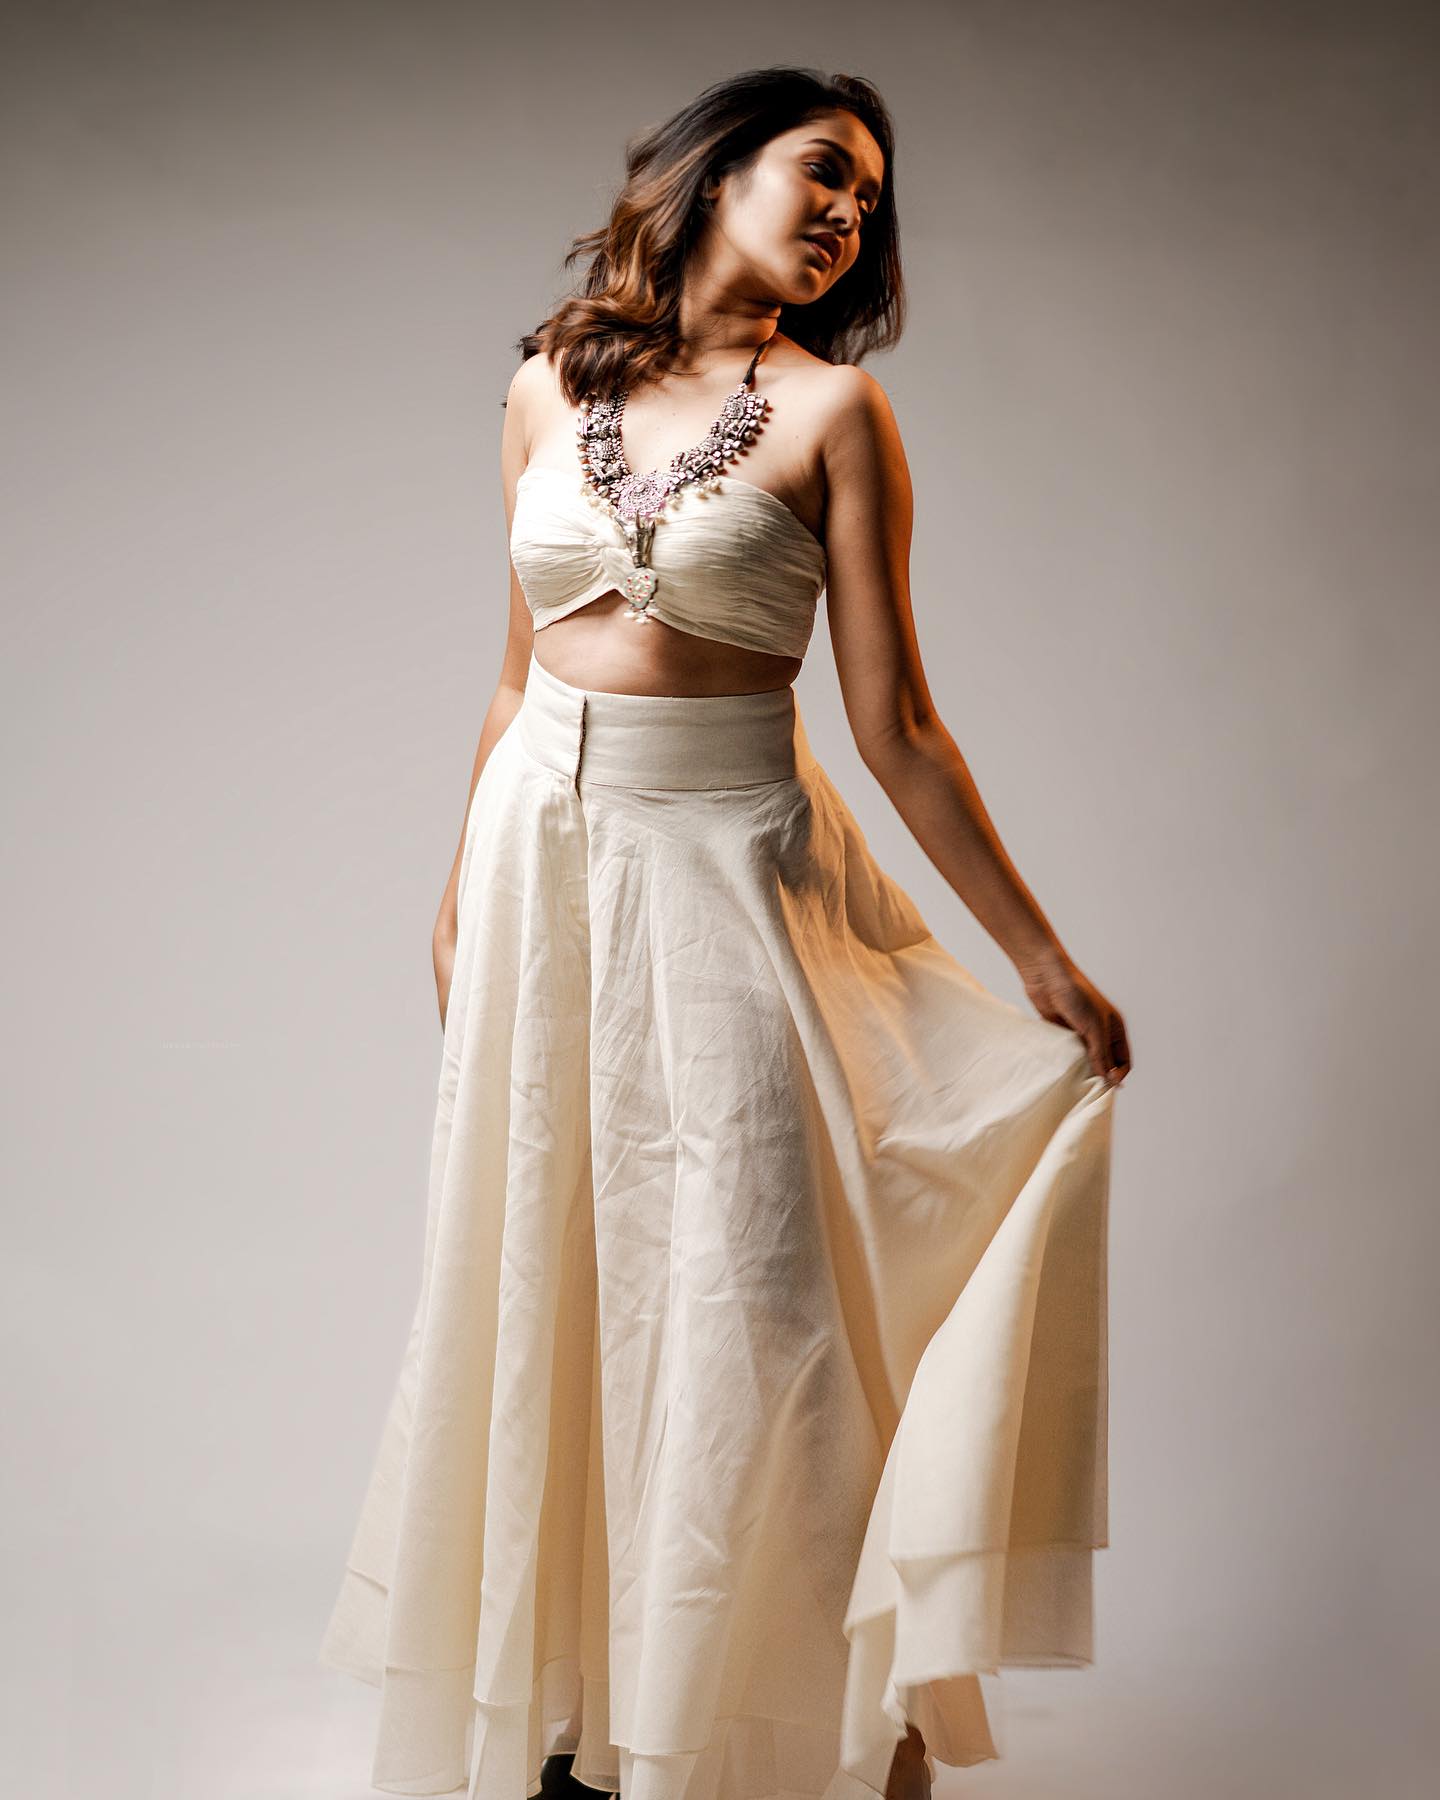 anikha-surendran-in-off-white-dress-photoshoot-latest